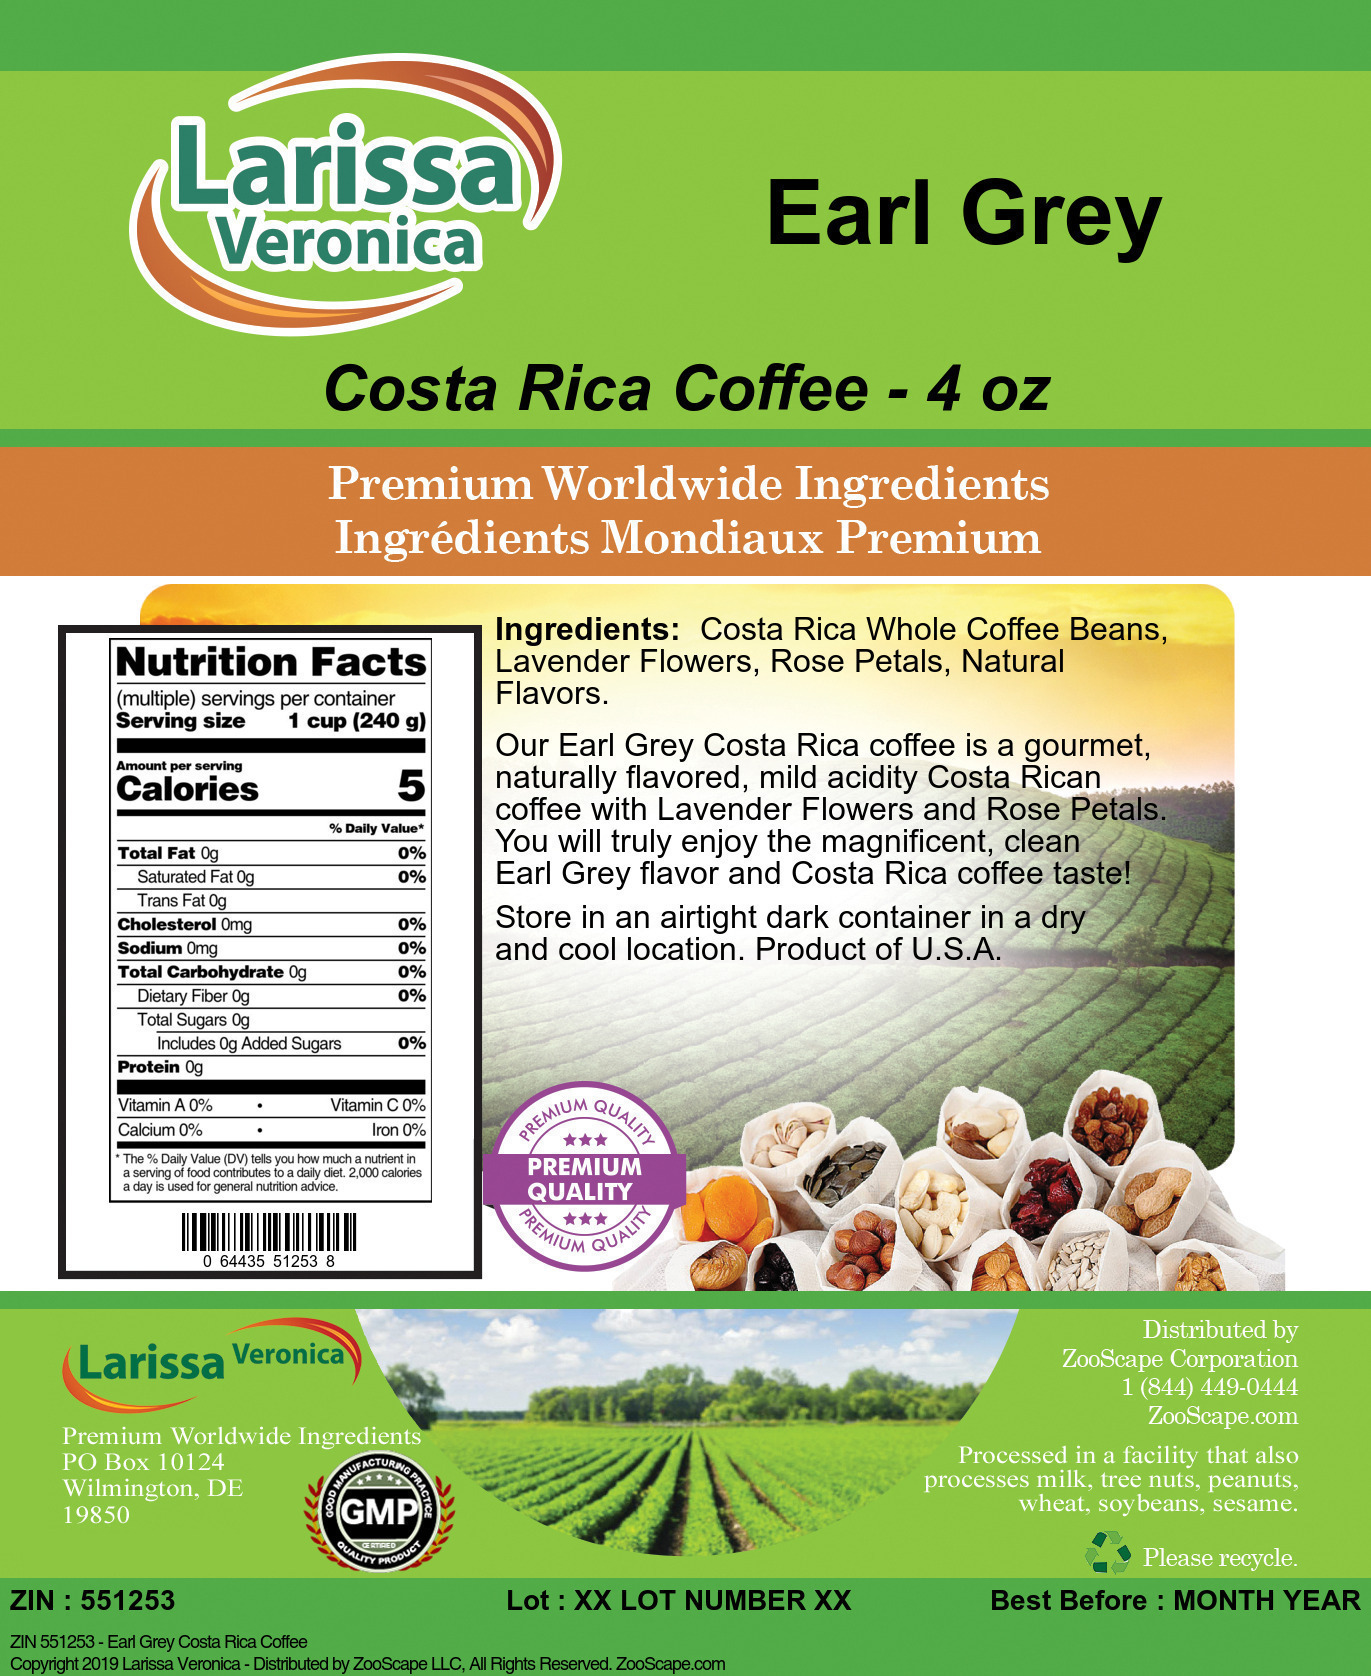 Earl Grey Costa Rica Coffee - Label